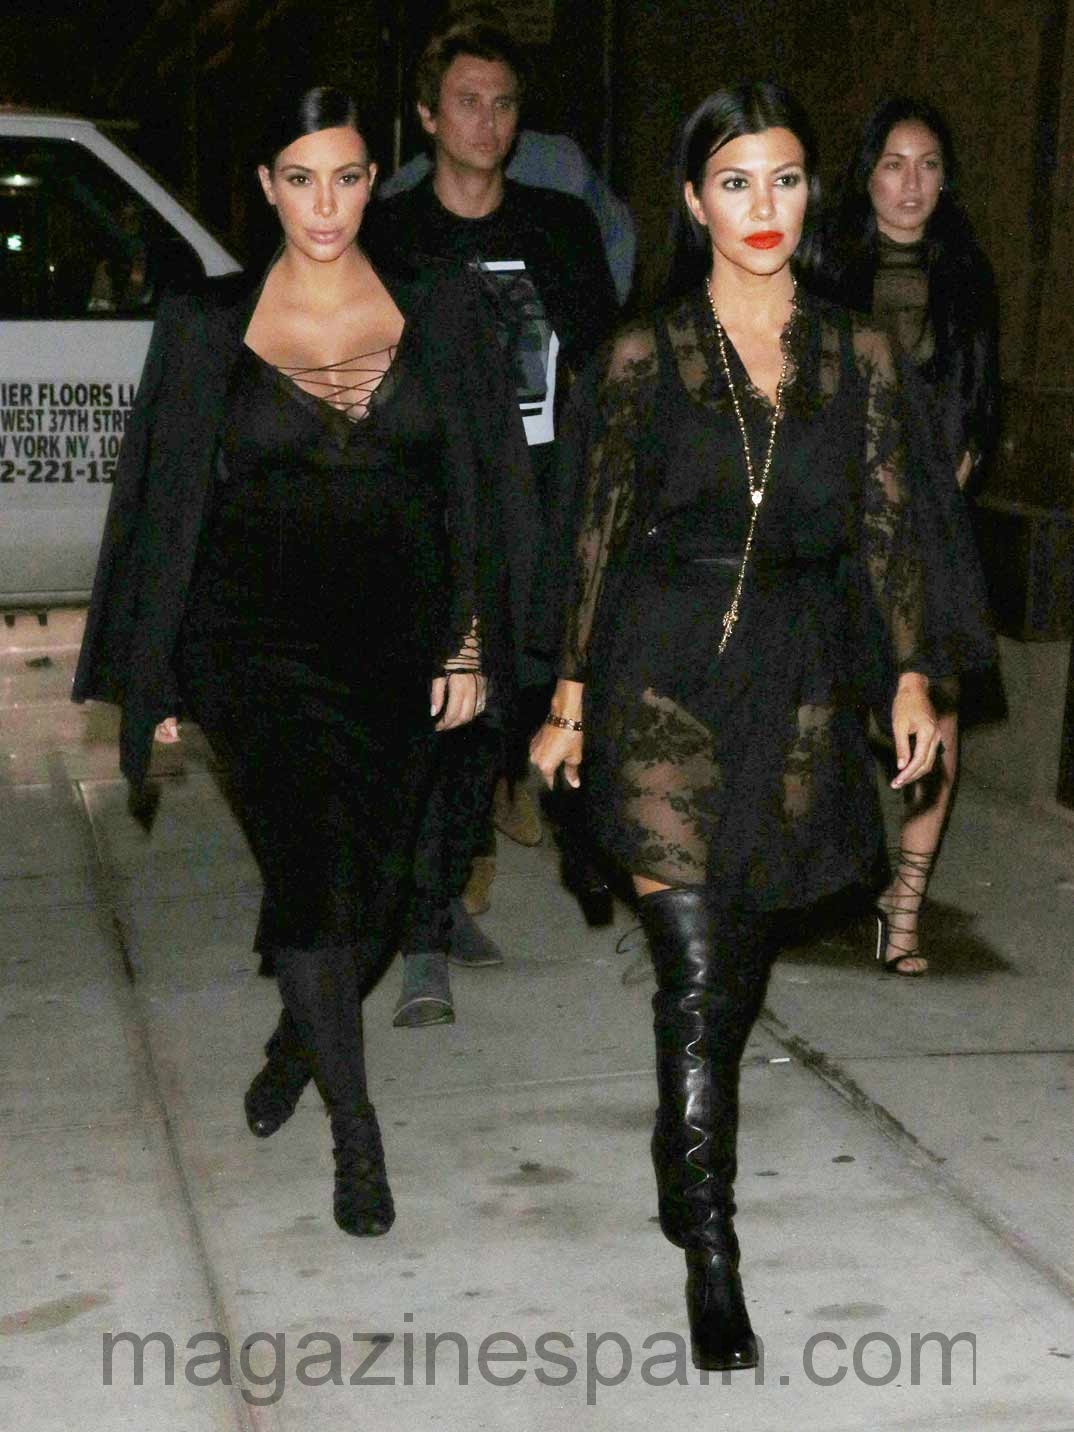 Kim Kardashian and Kourtney Kardashian